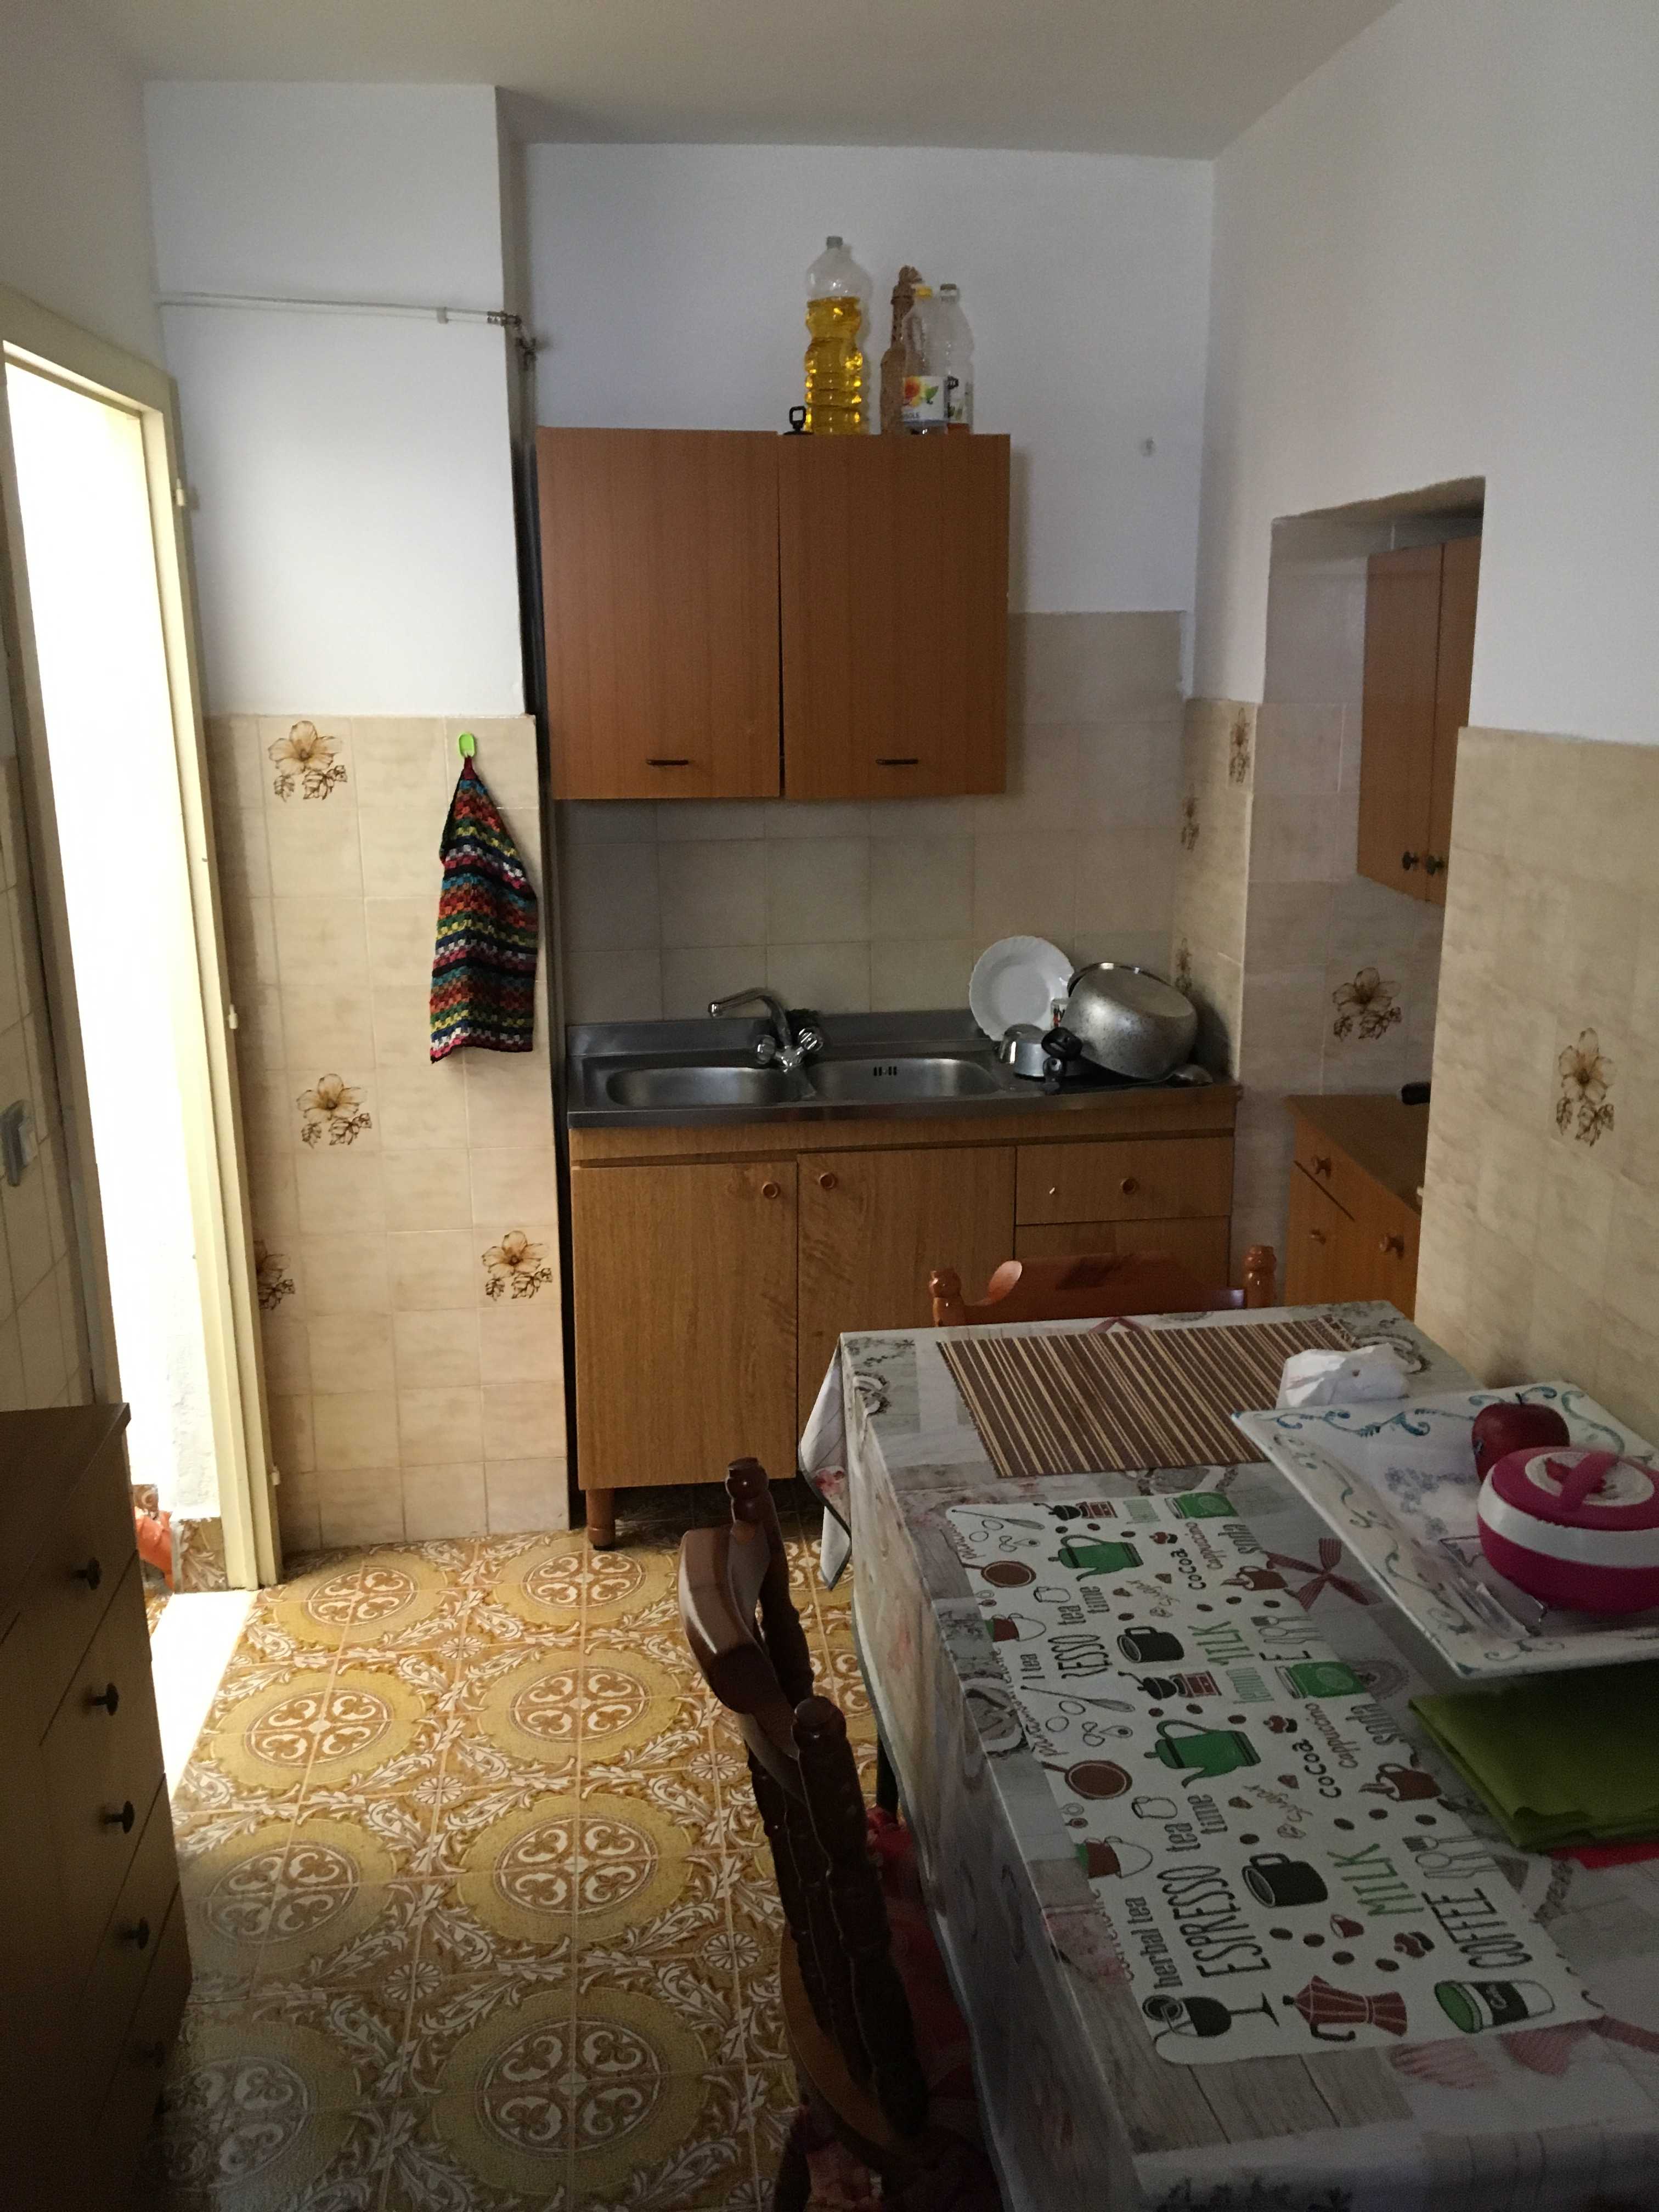 Vendite Salento: Vendita appartamento (Alessano) - cucina1